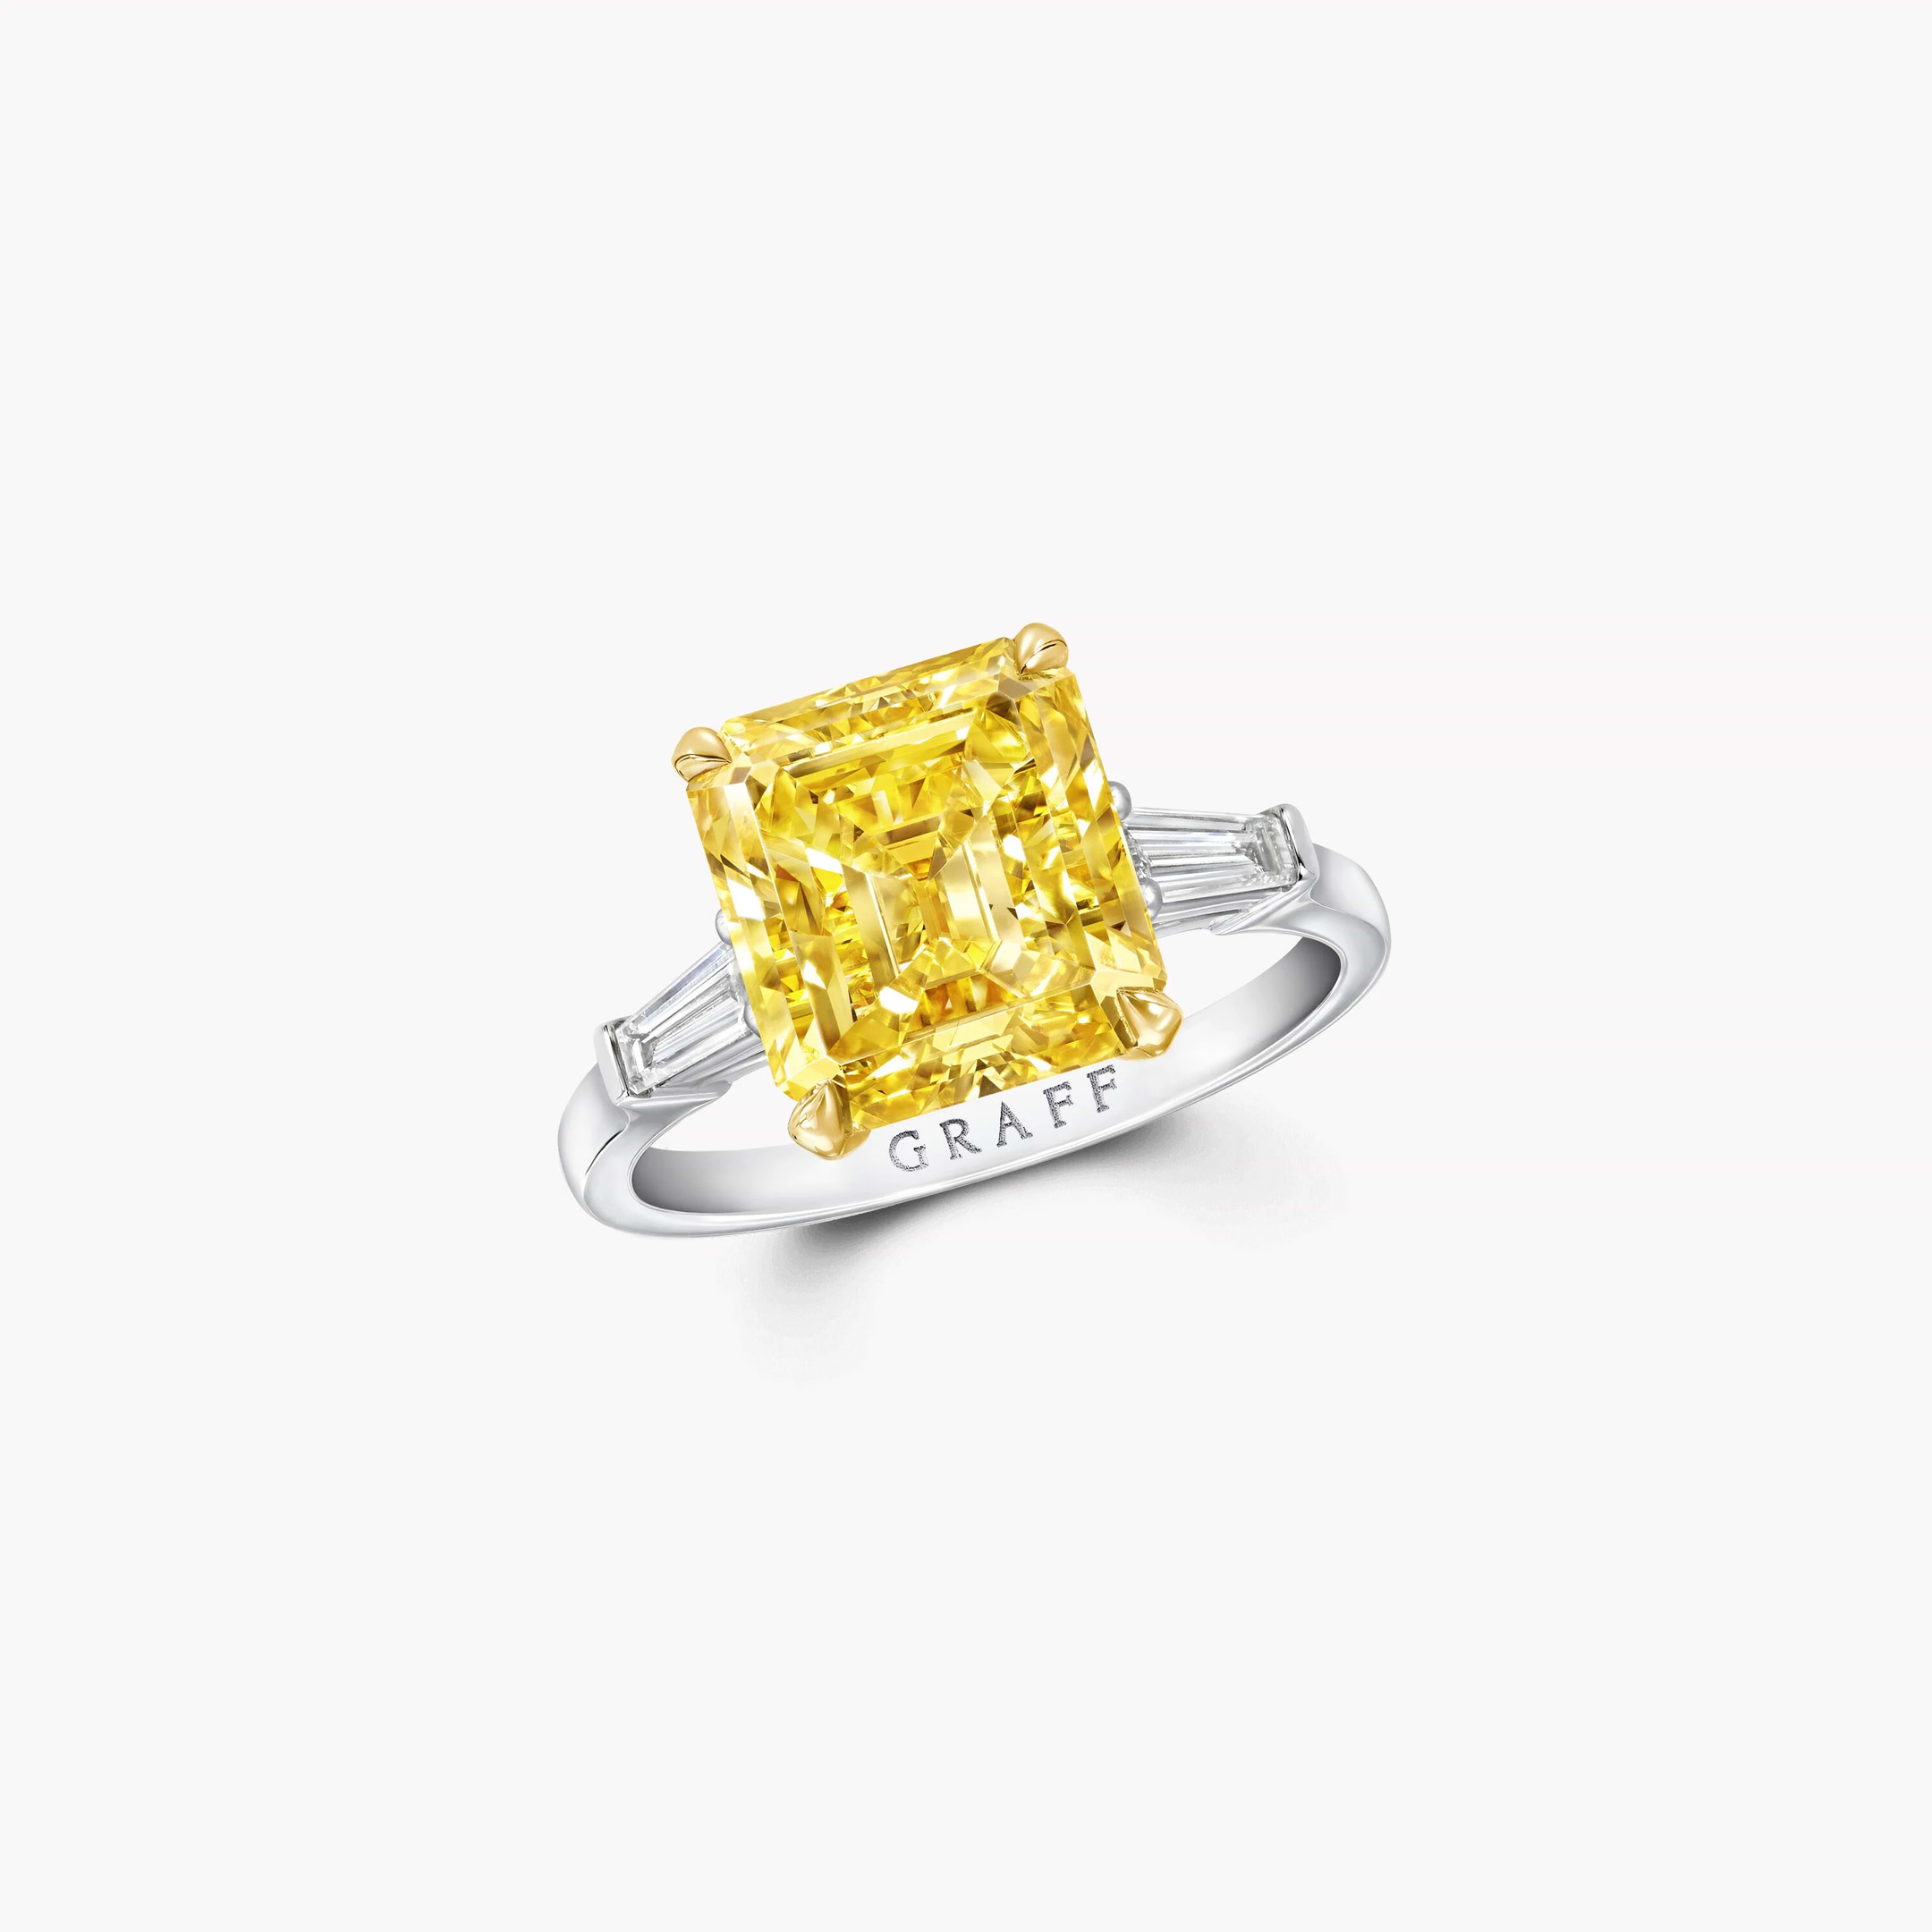 Vivid Yellow Diamond Ring by Graff